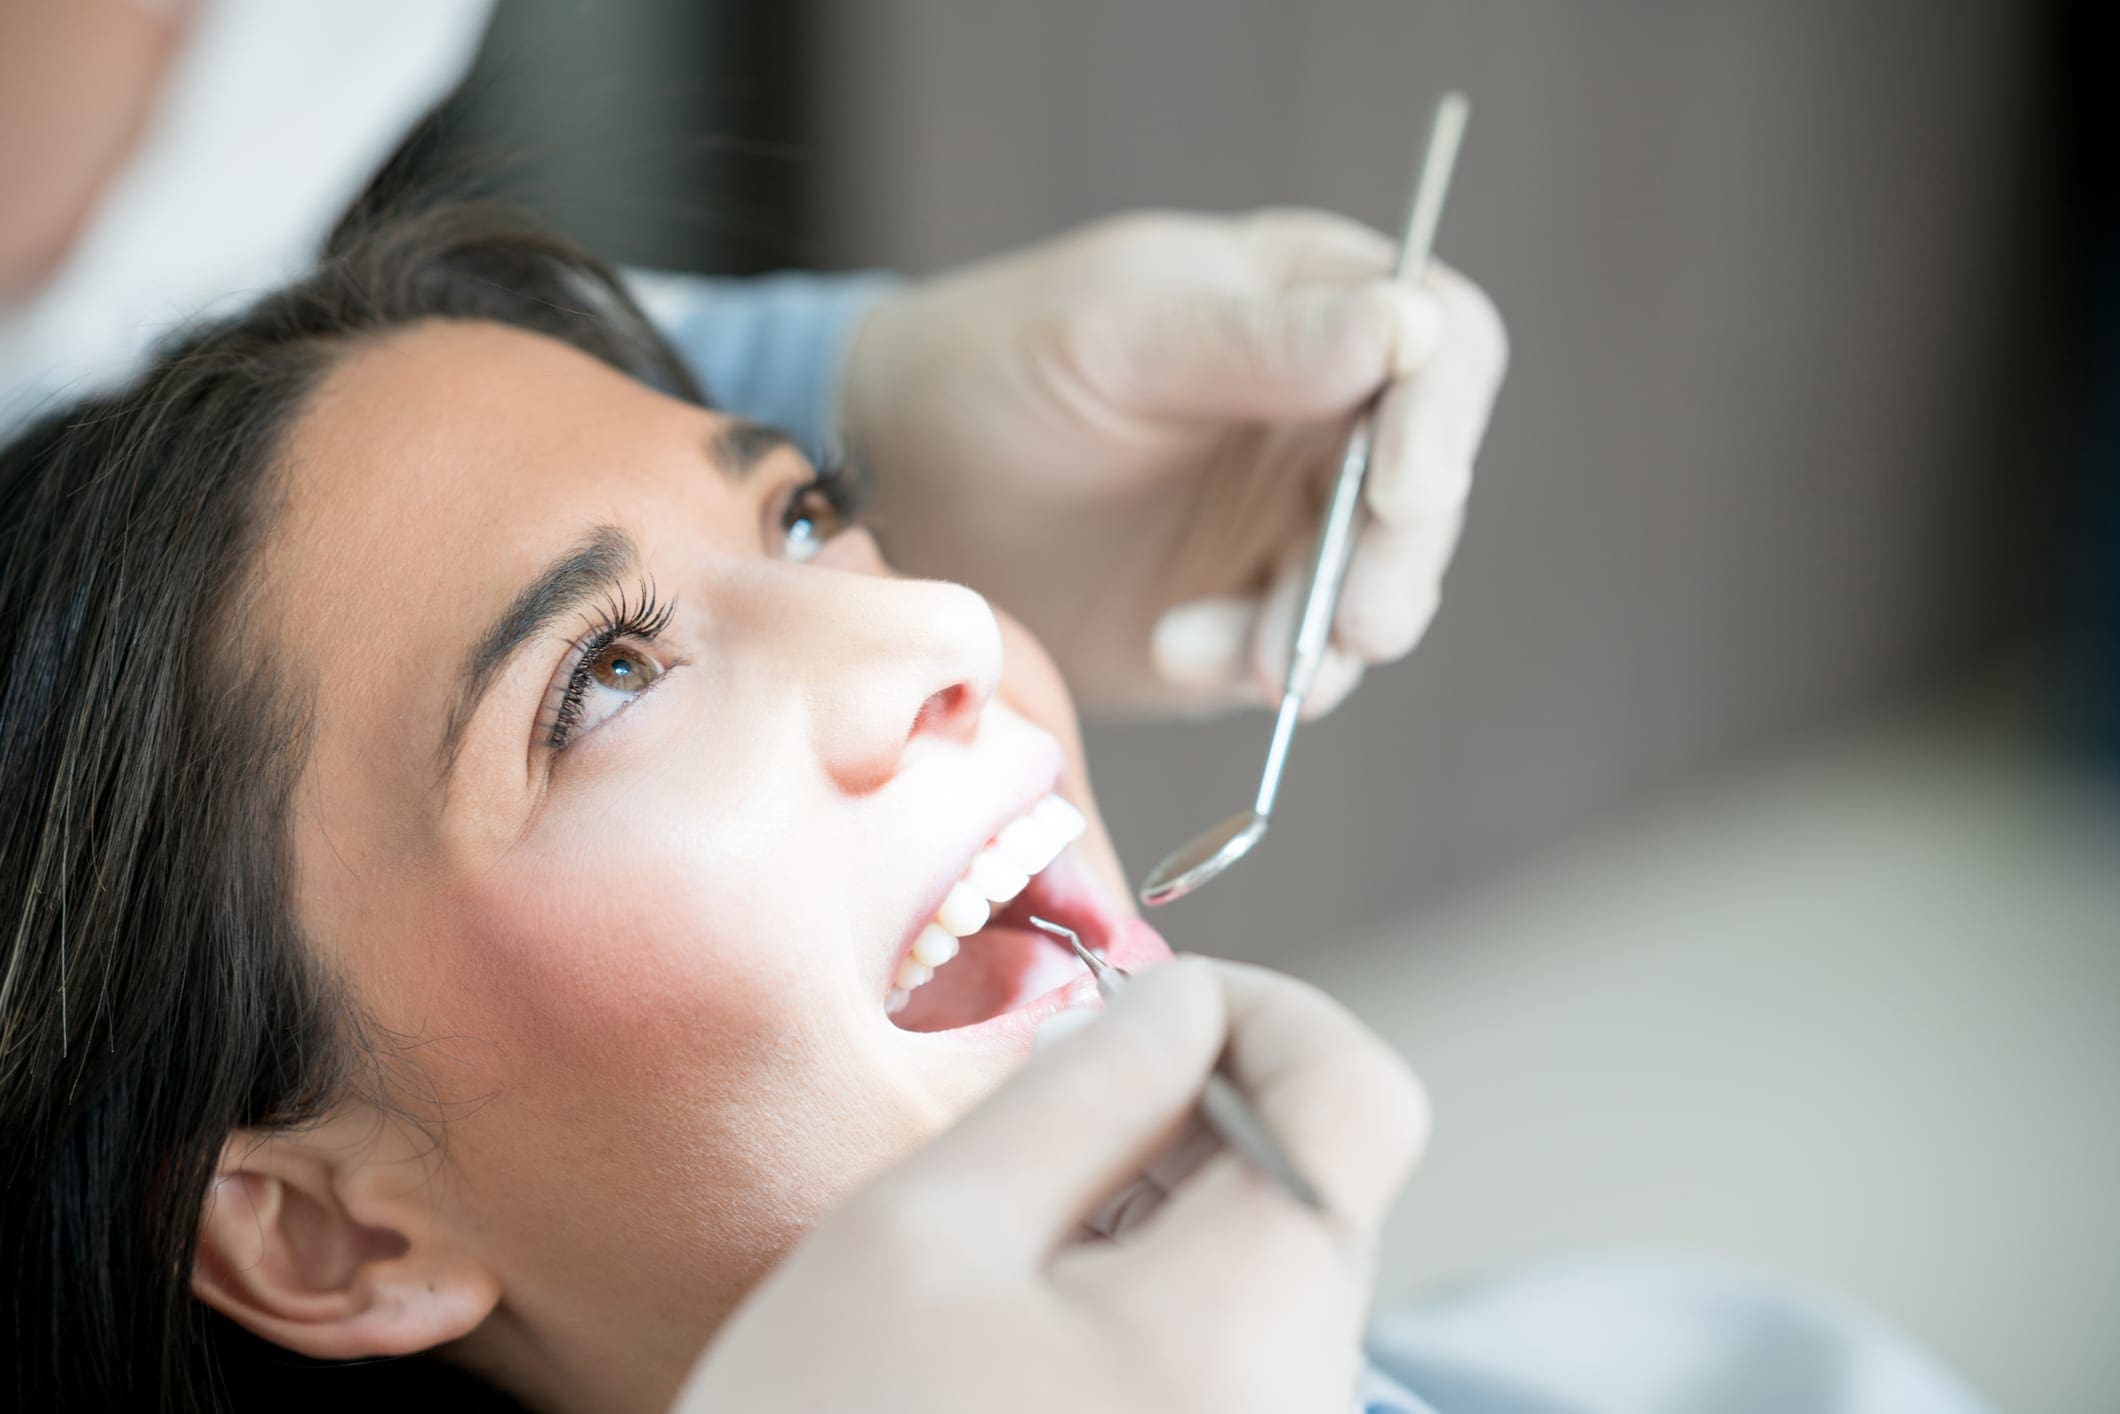 Campbelltown Family Dental Care 3 dentists 2020